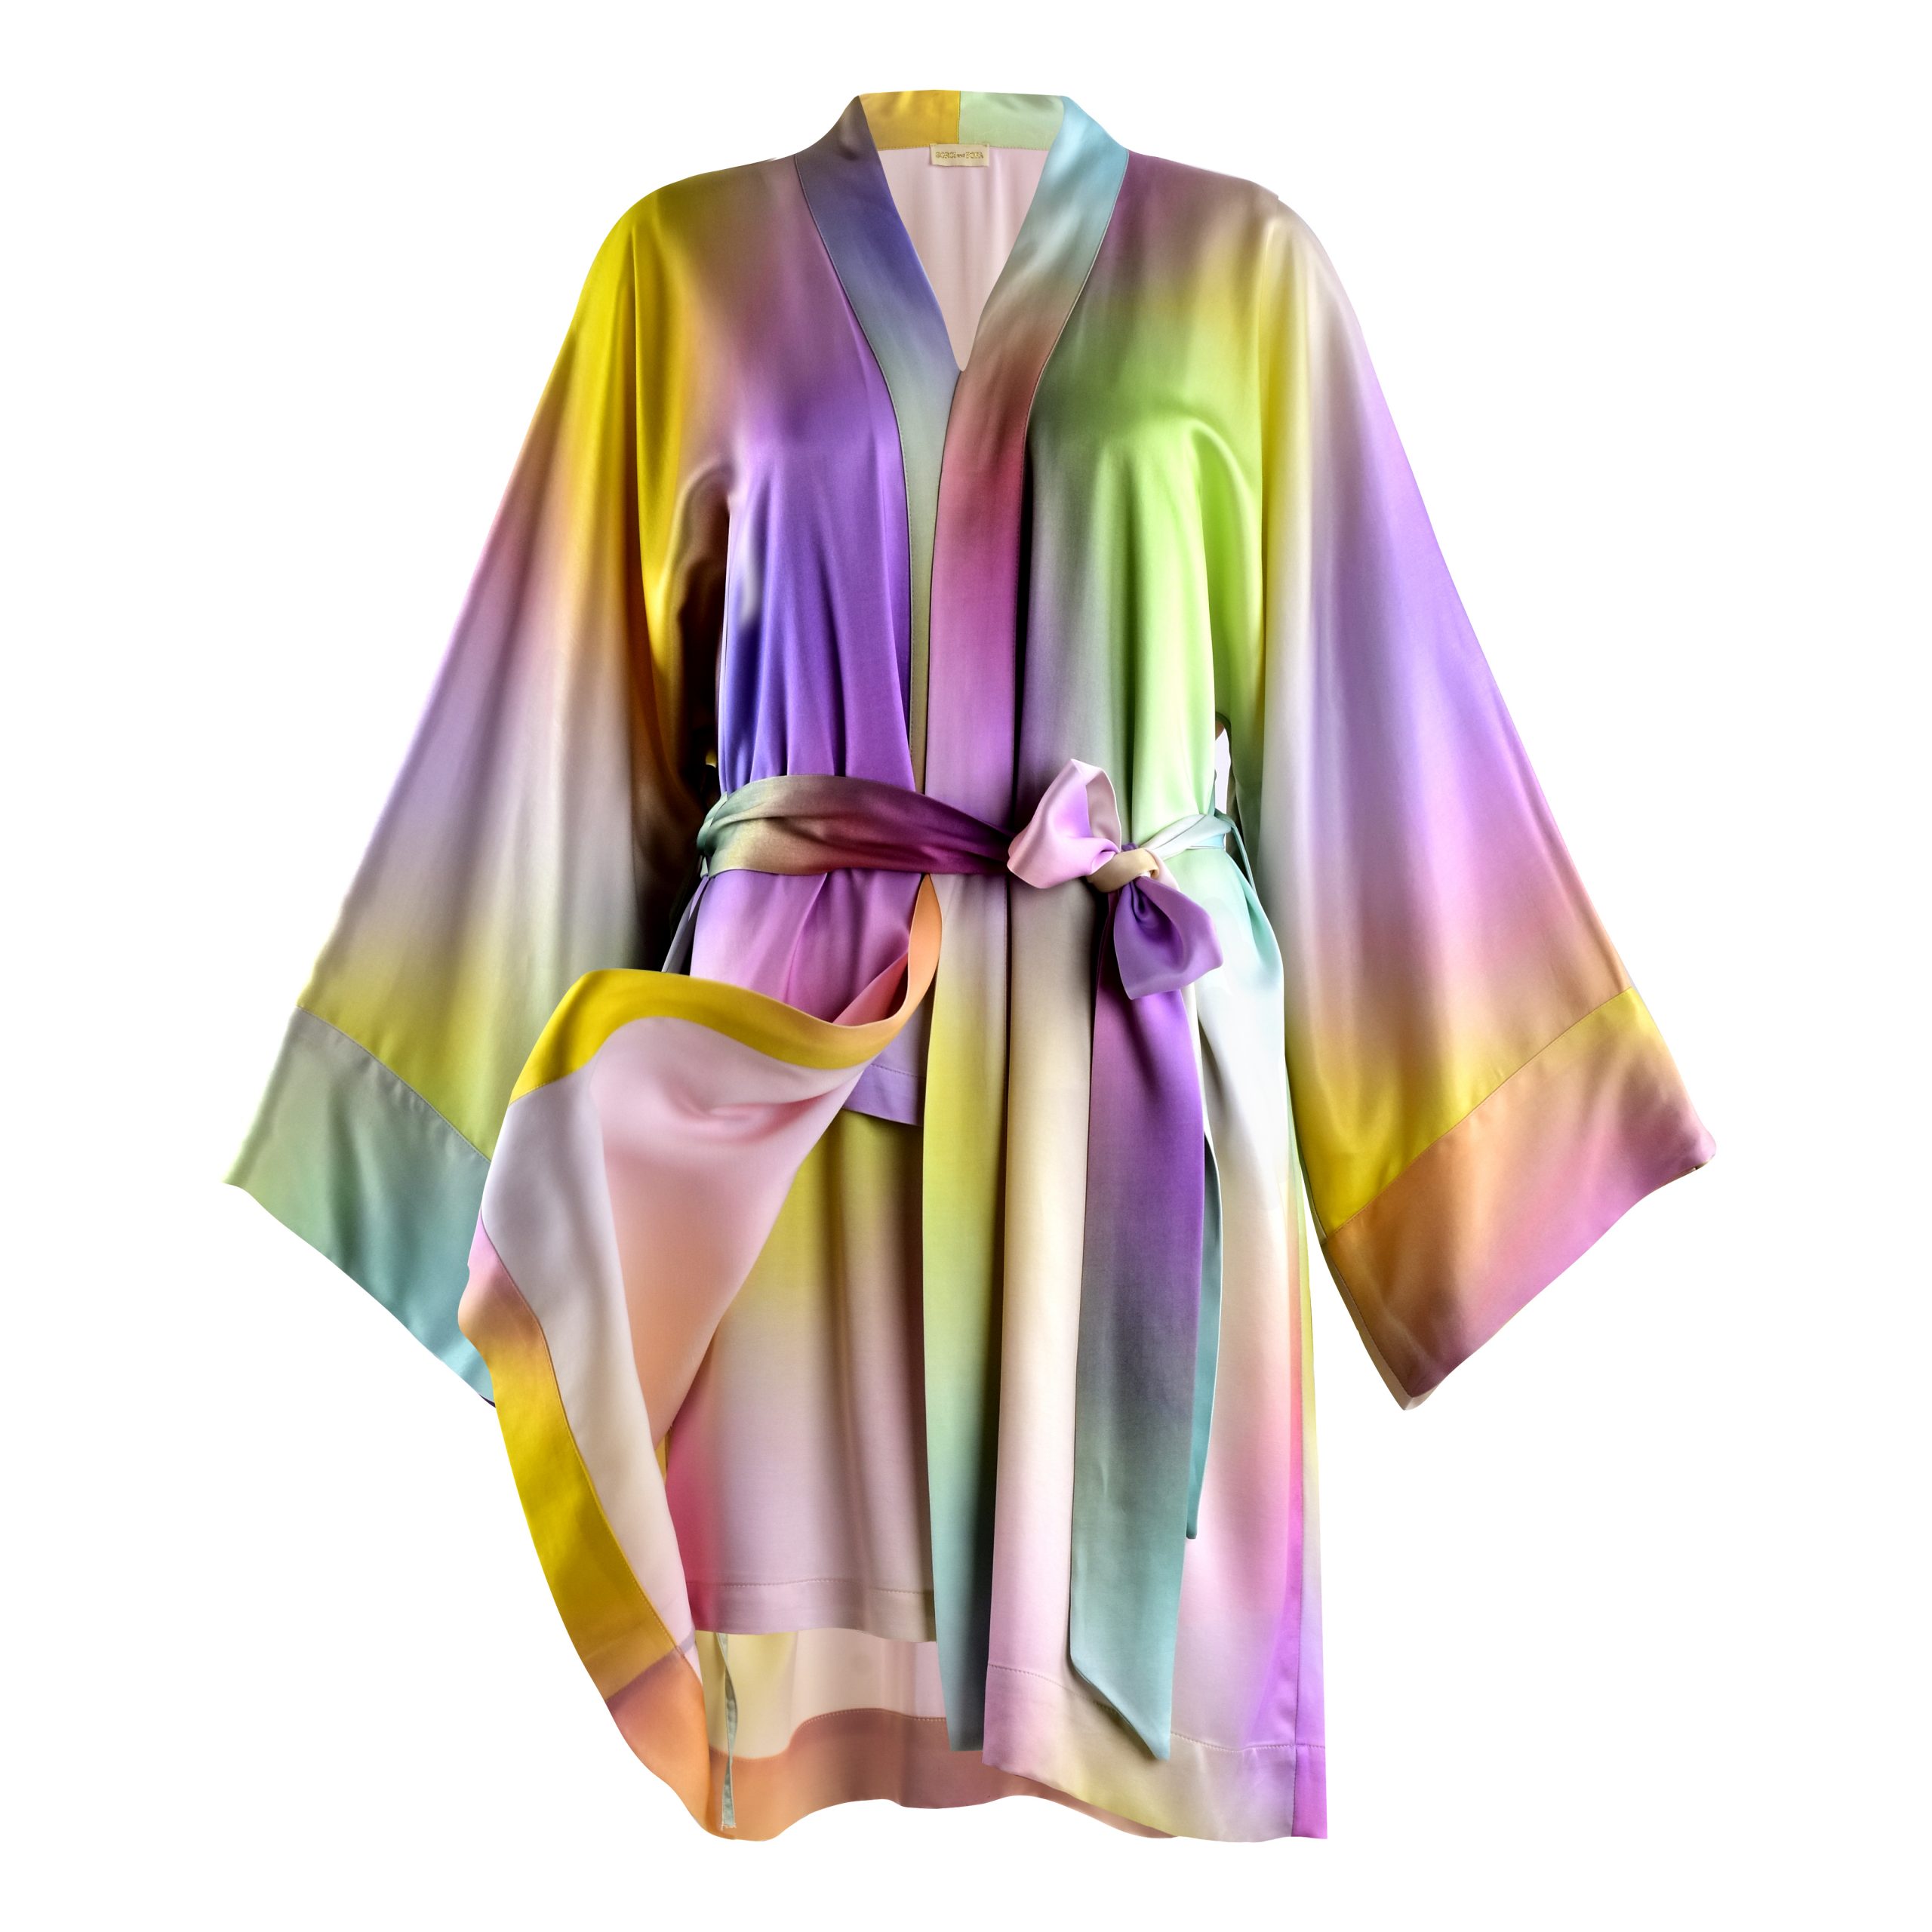 Yetiskin-Kimono-Kisa-Acik-scaled-1.jpg